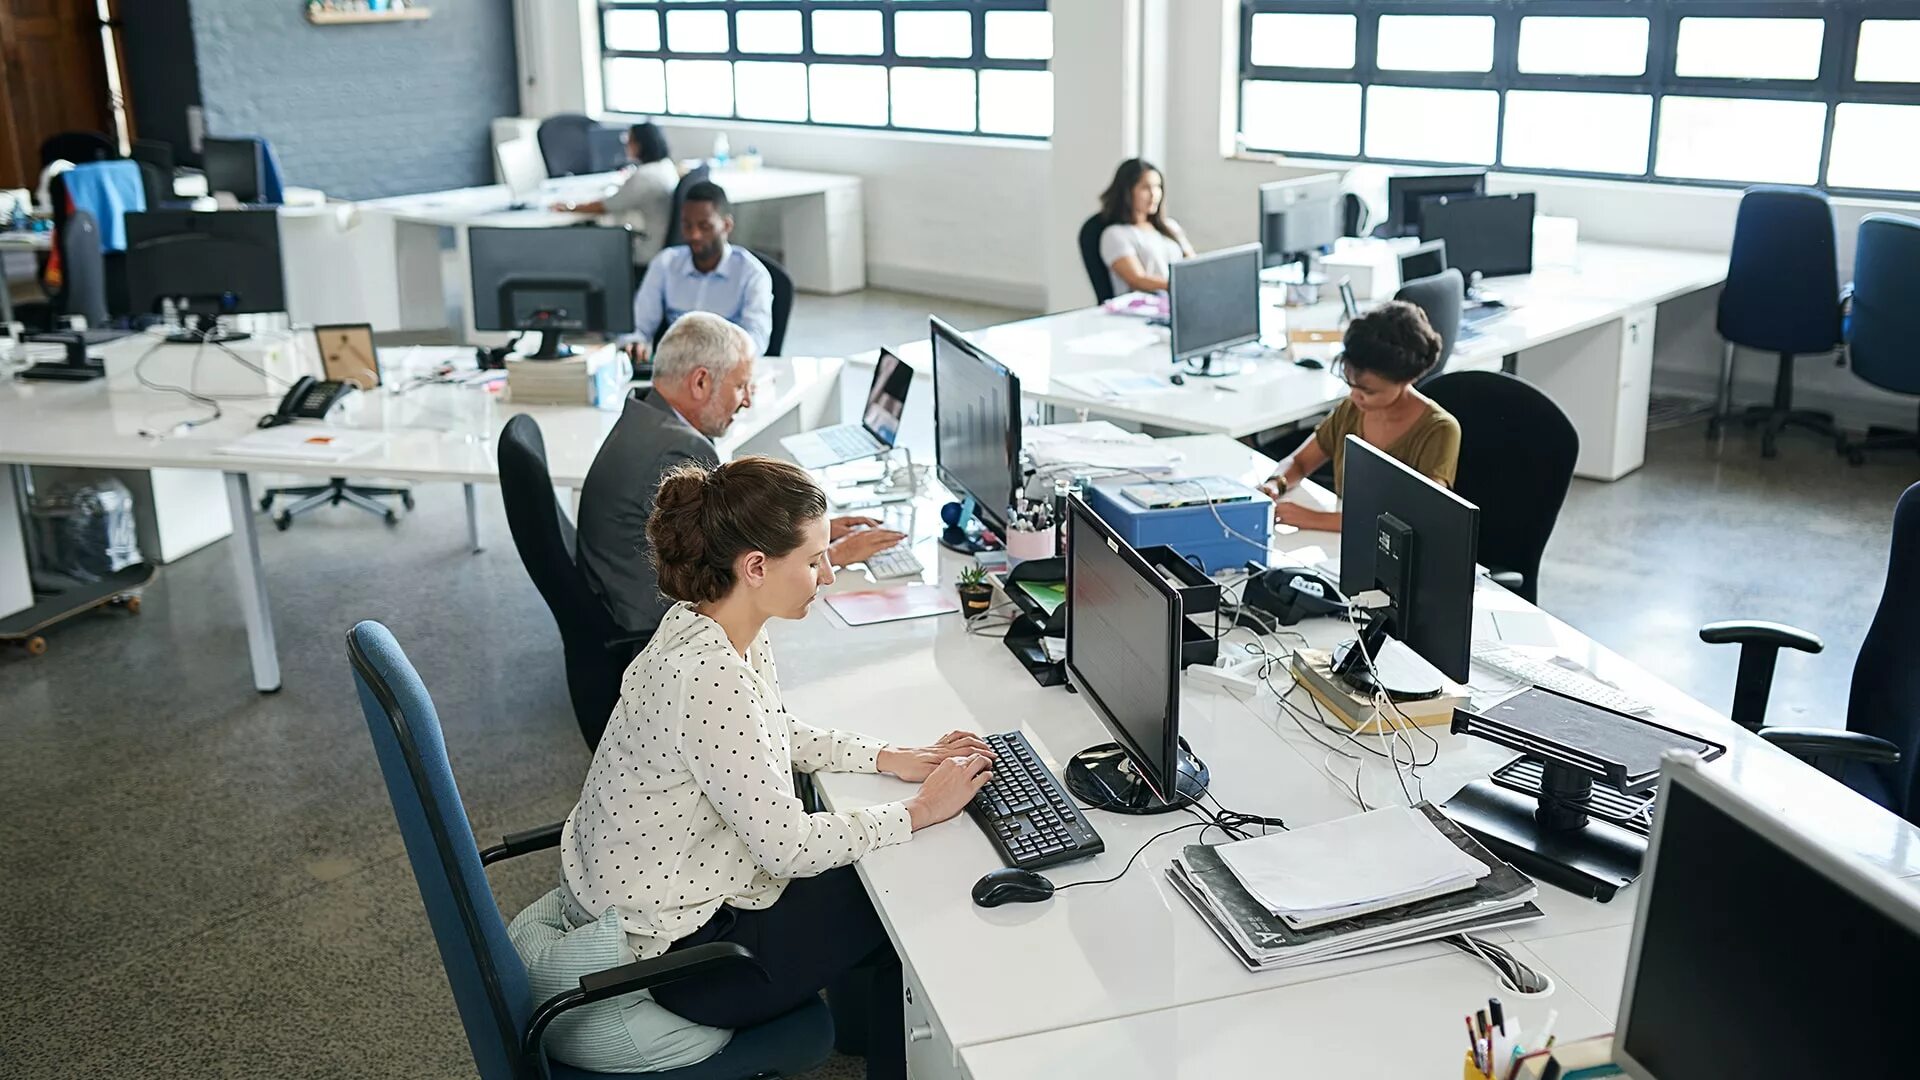 Computer company. Офис с сотрудниками. Люди в офисе. Работник офиса. Люди работают в офисе.